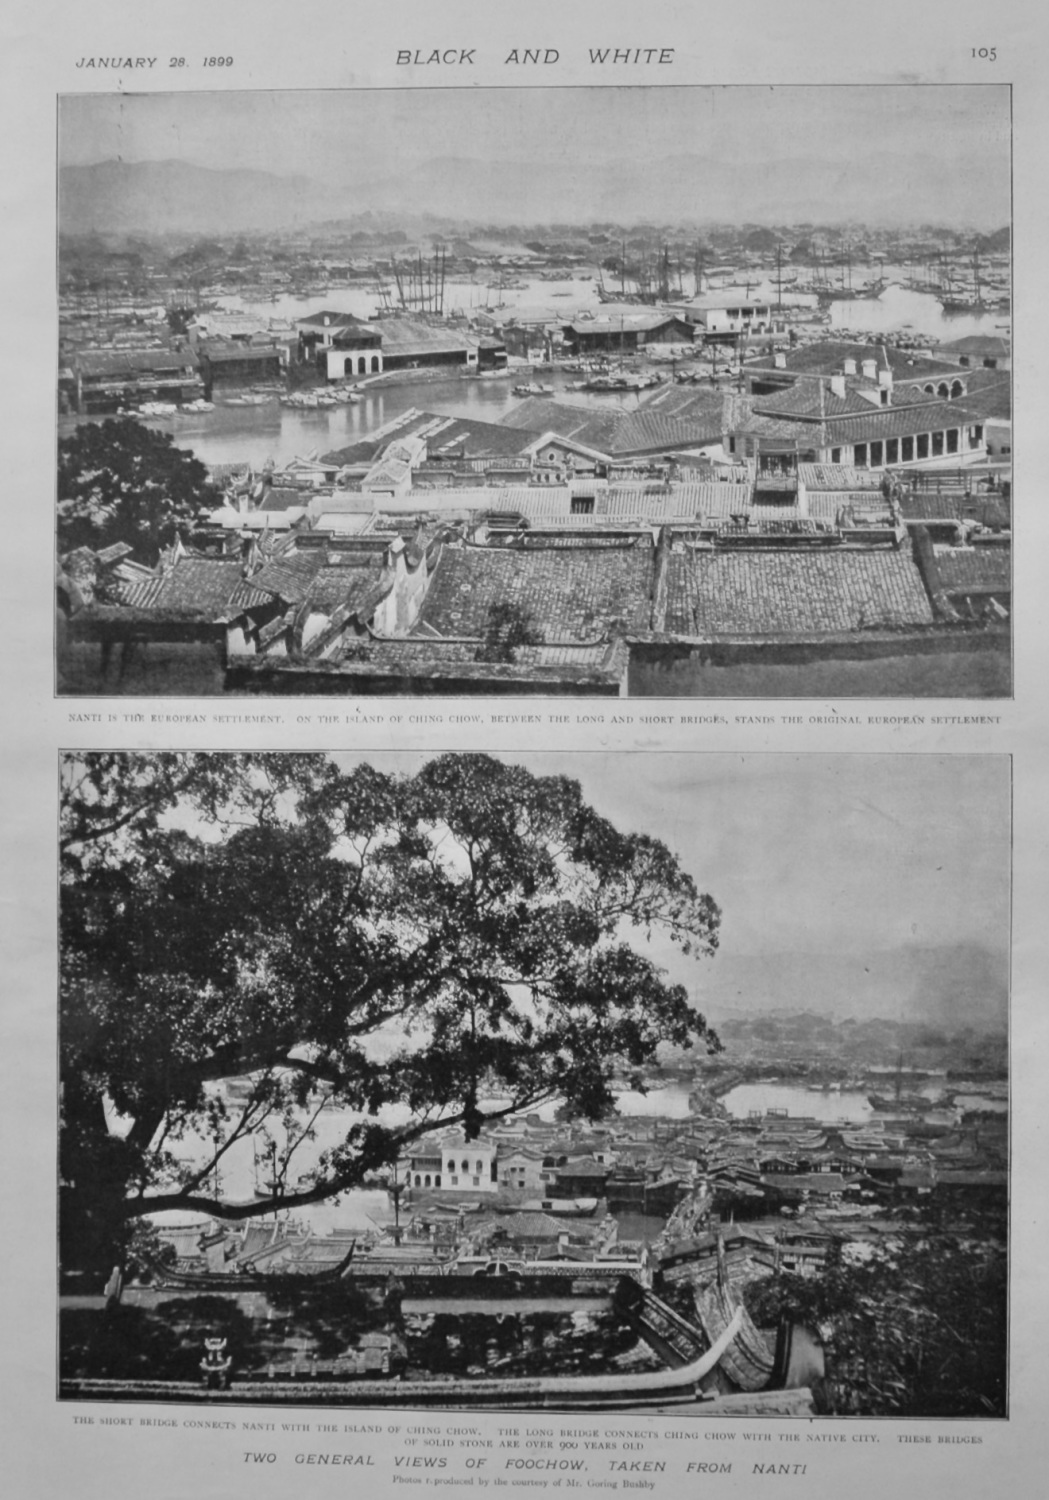 Two General Views of Foochow, taken from Nanti.  1899.